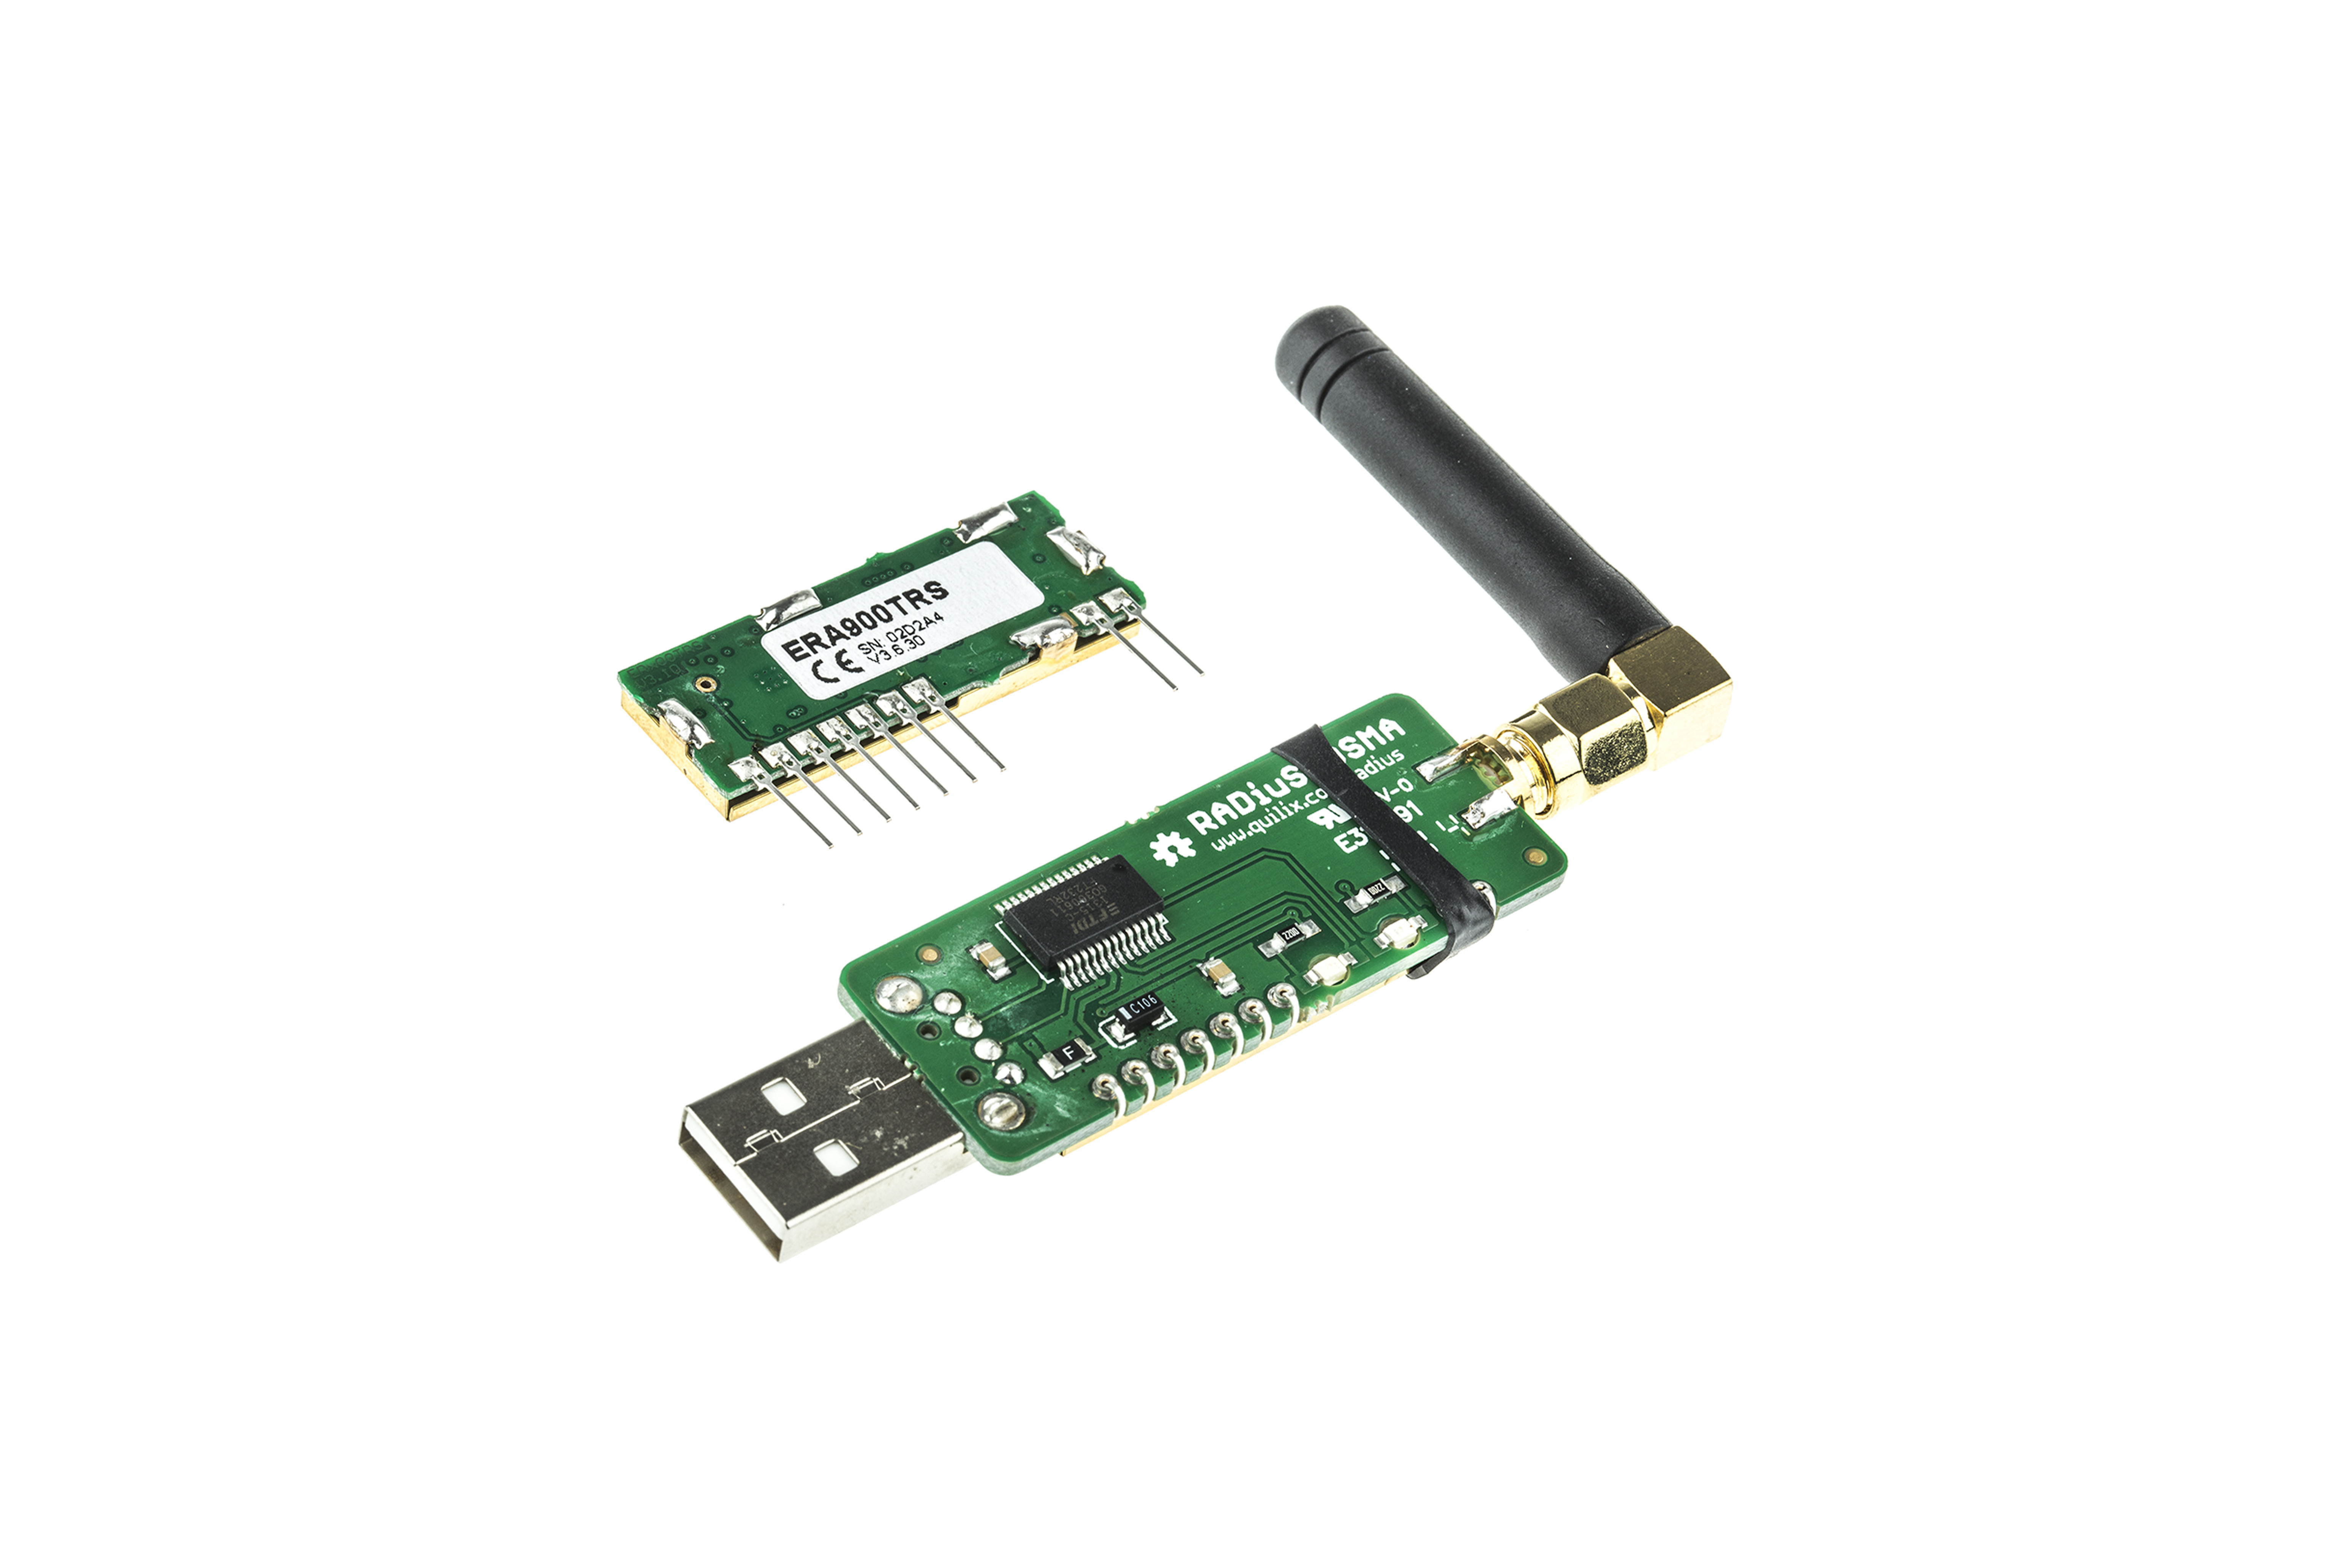 ERA900TRS EN CONNECT2-PI USB 868 MHZ KIT